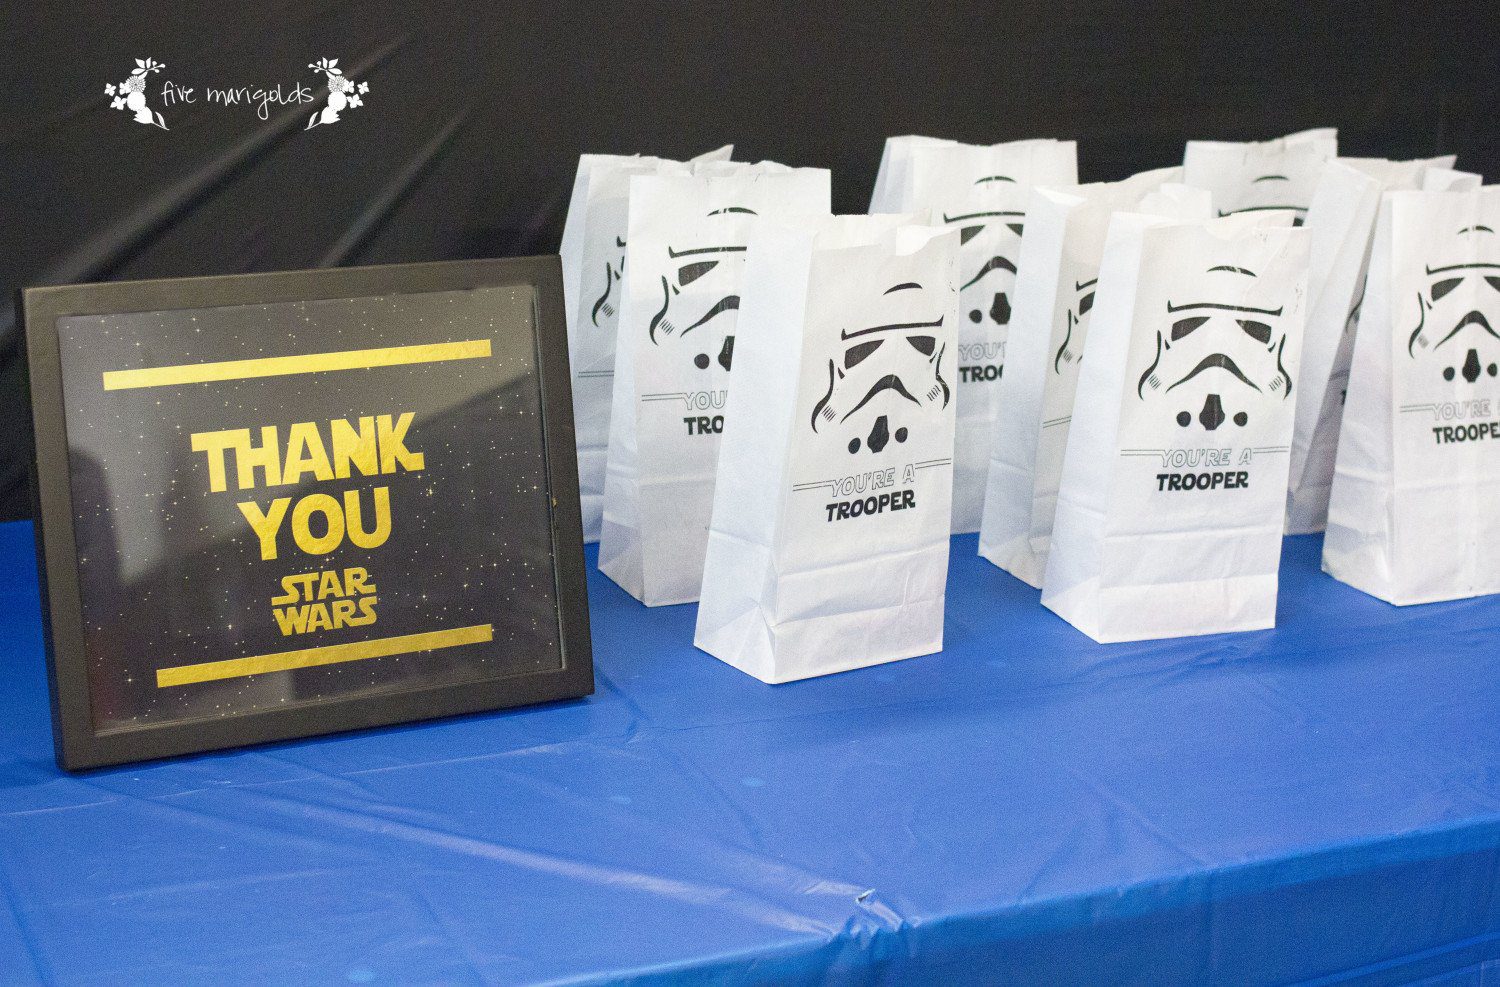 Free Printable Star Wars Birthday Party Storm Trooper Favor Bags | www.fivemarigolds.com